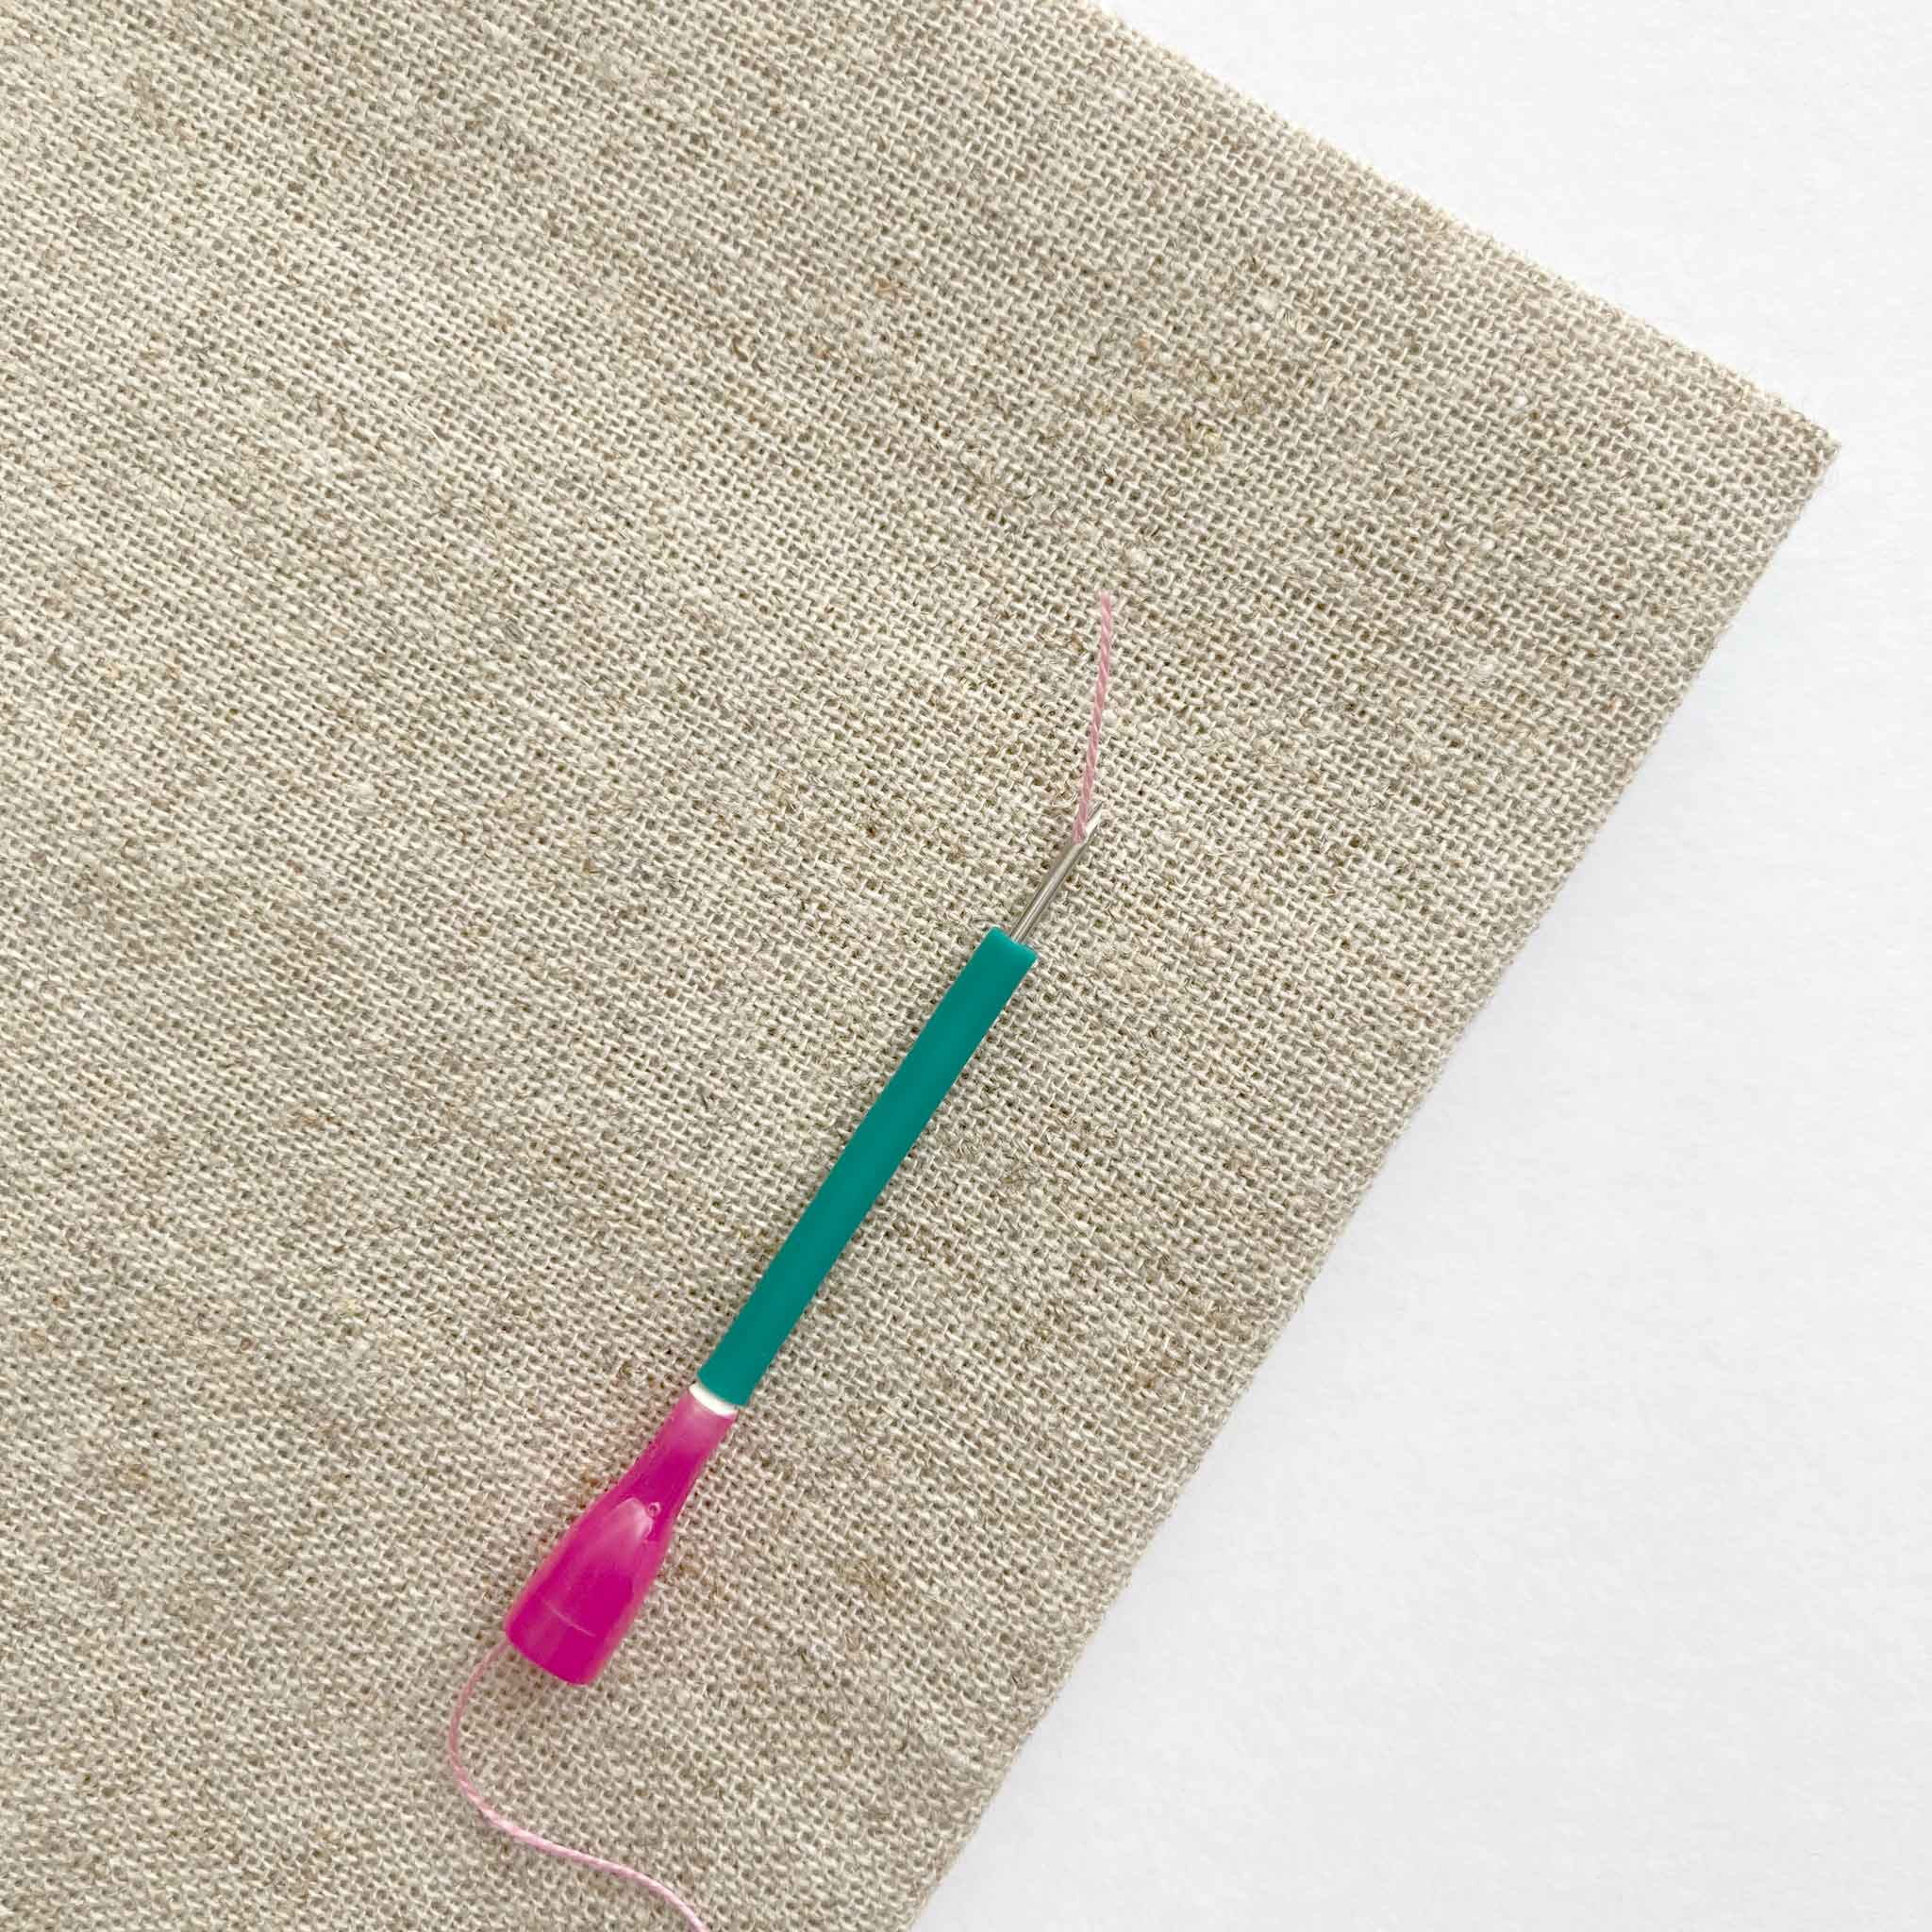 Linen Punch Needle Fabric